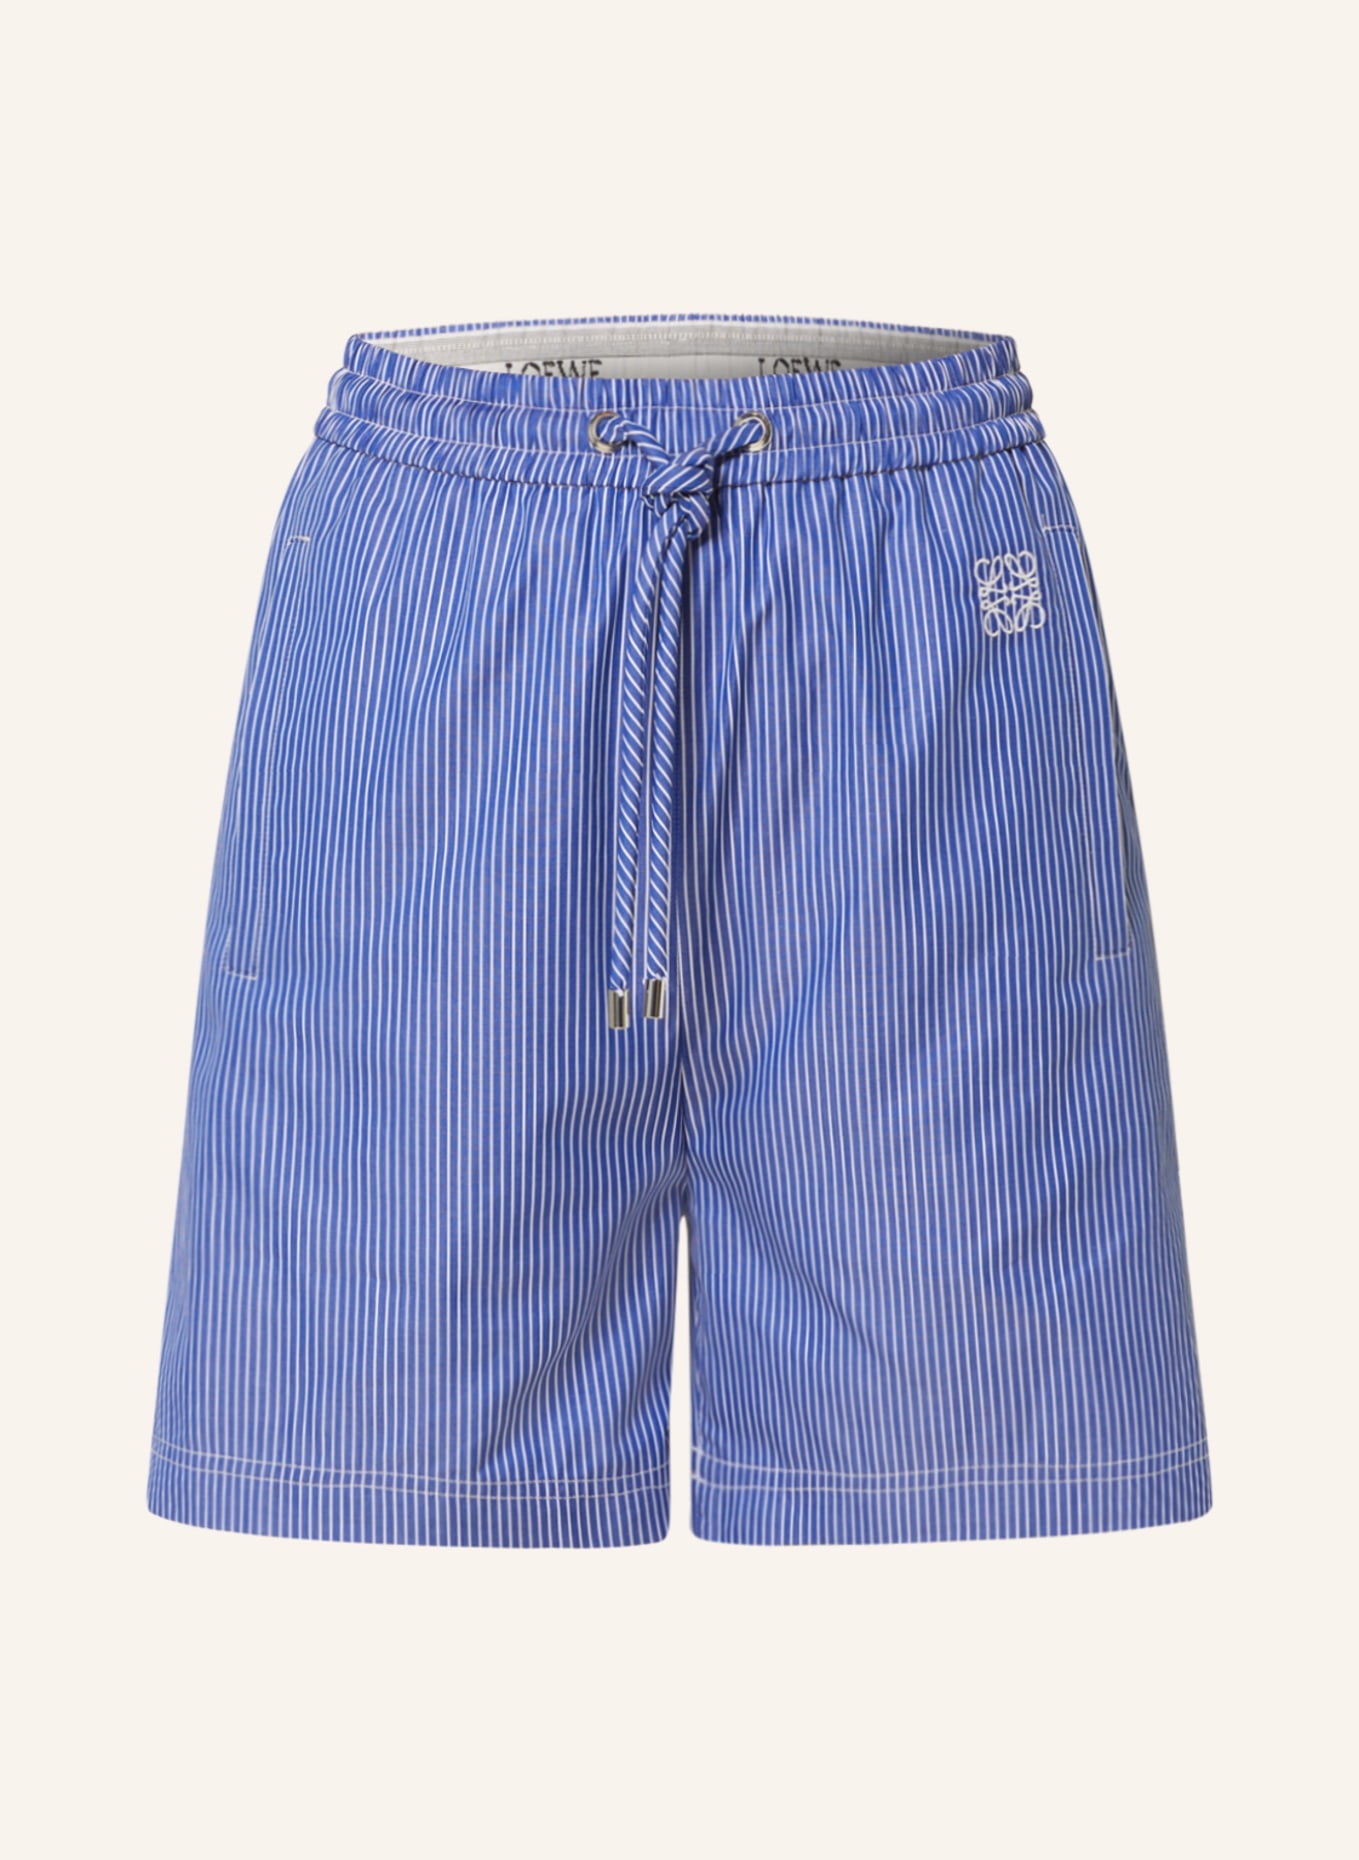 LOEWE Shorts, Farbe: DUNKELBLAU/ WEISS (Bild 1)